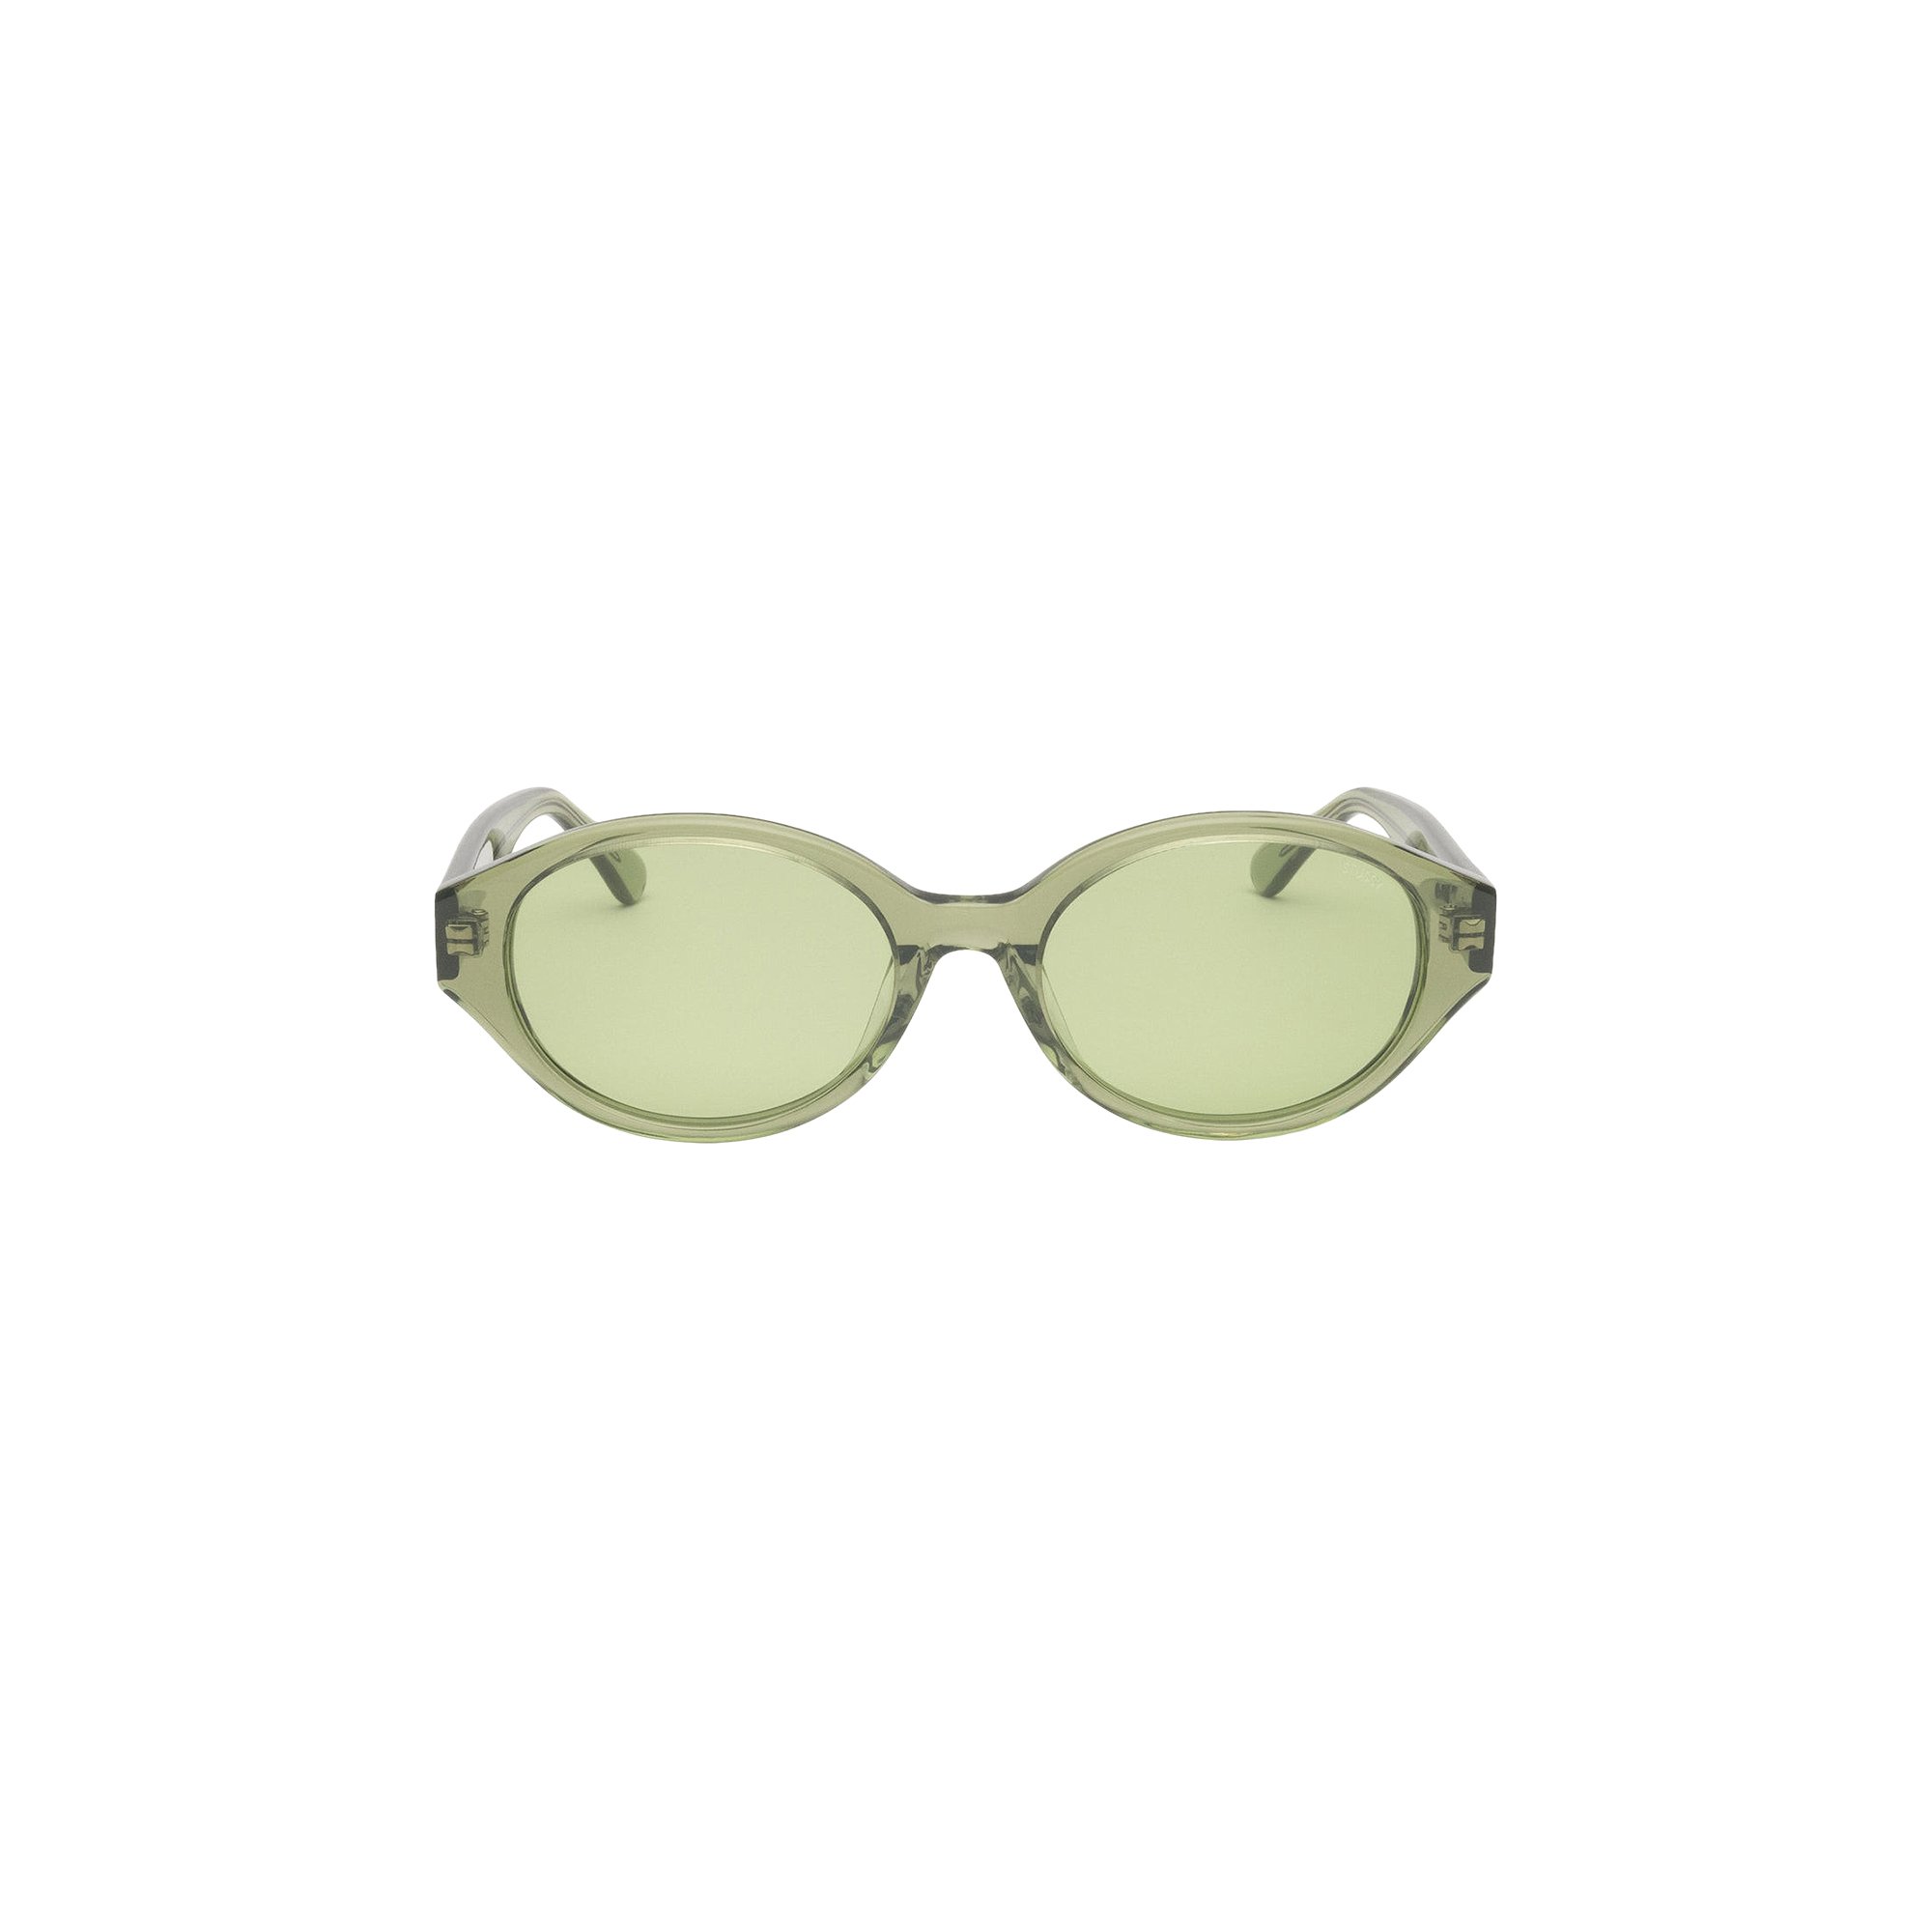 Buy Stussy Penn Sunglasses 'Green' - 338209 GREE | GOAT